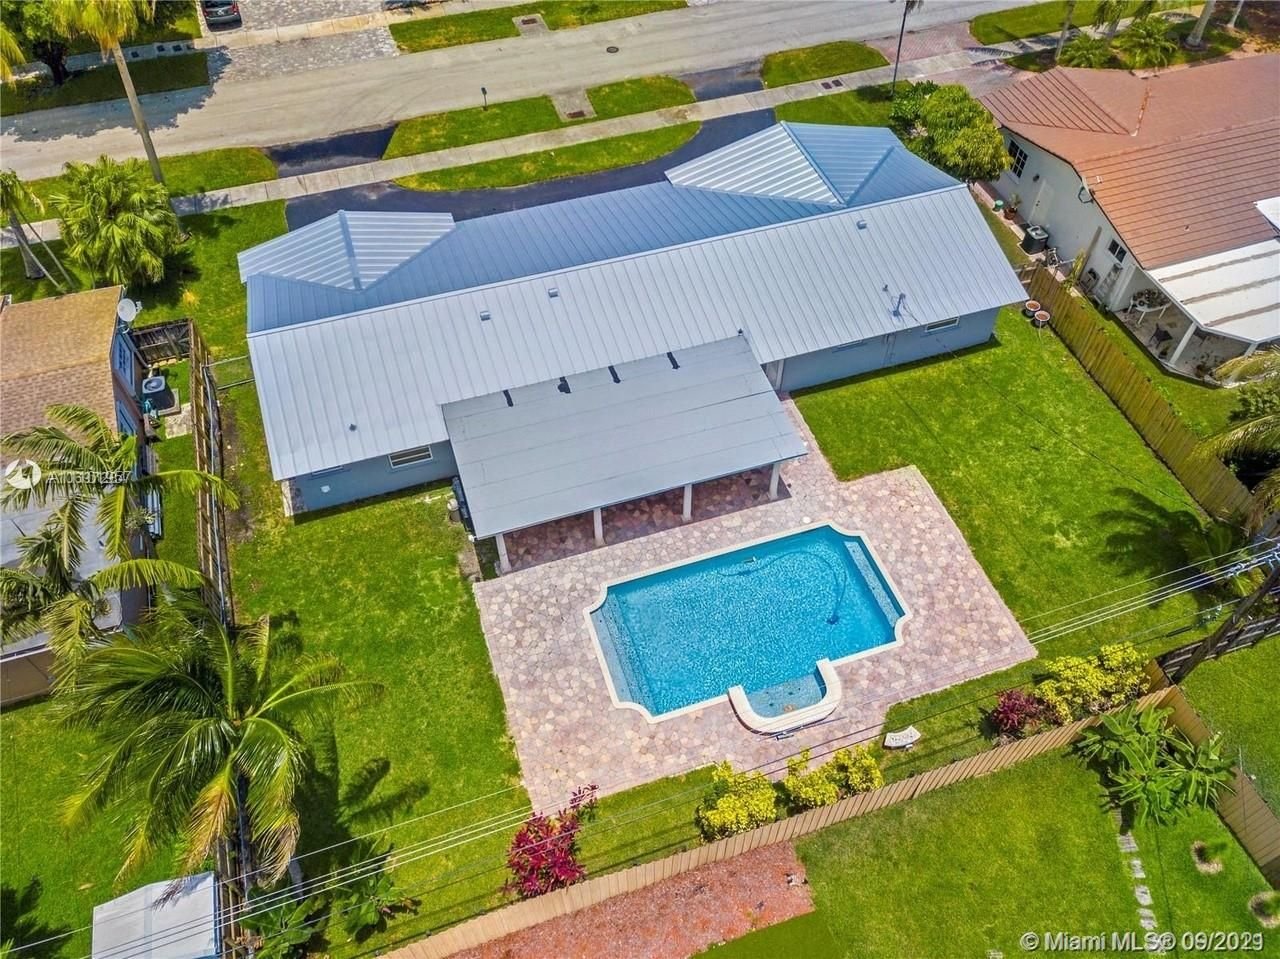 Real estate property located at 8620 85th Ave, Miami-Dade County, Miami, FL